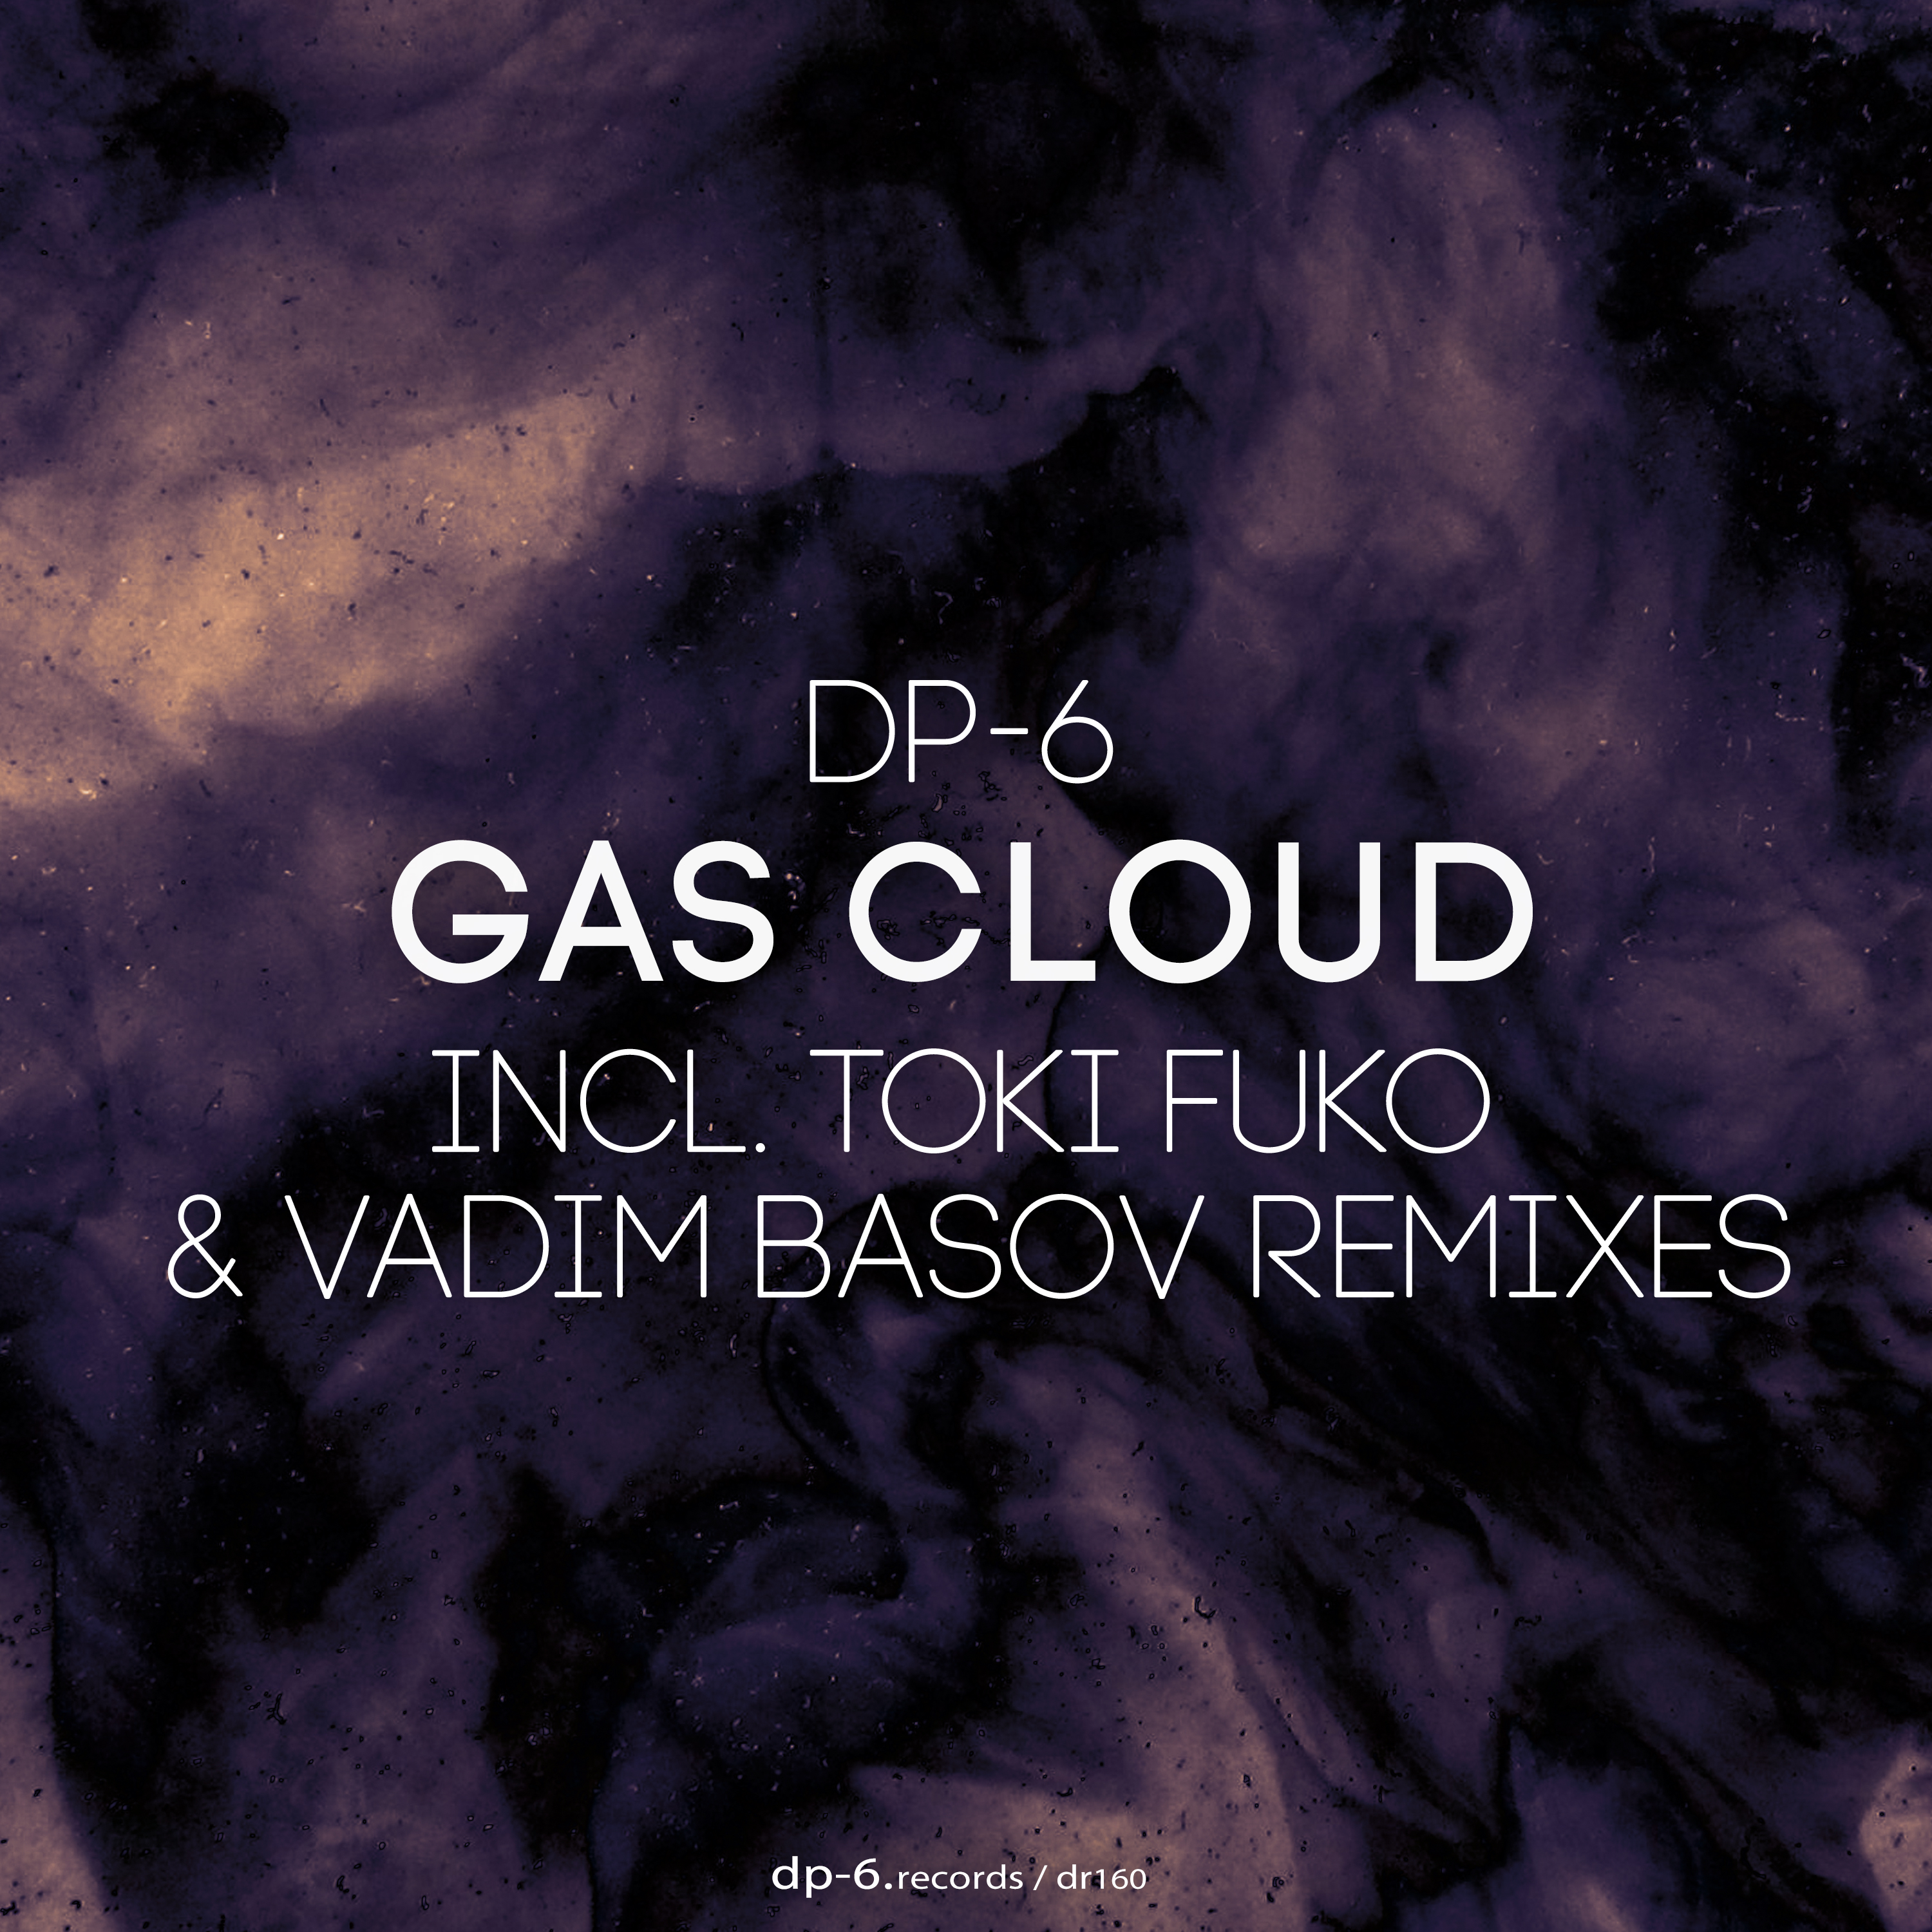 DP-6 Gas Cloud